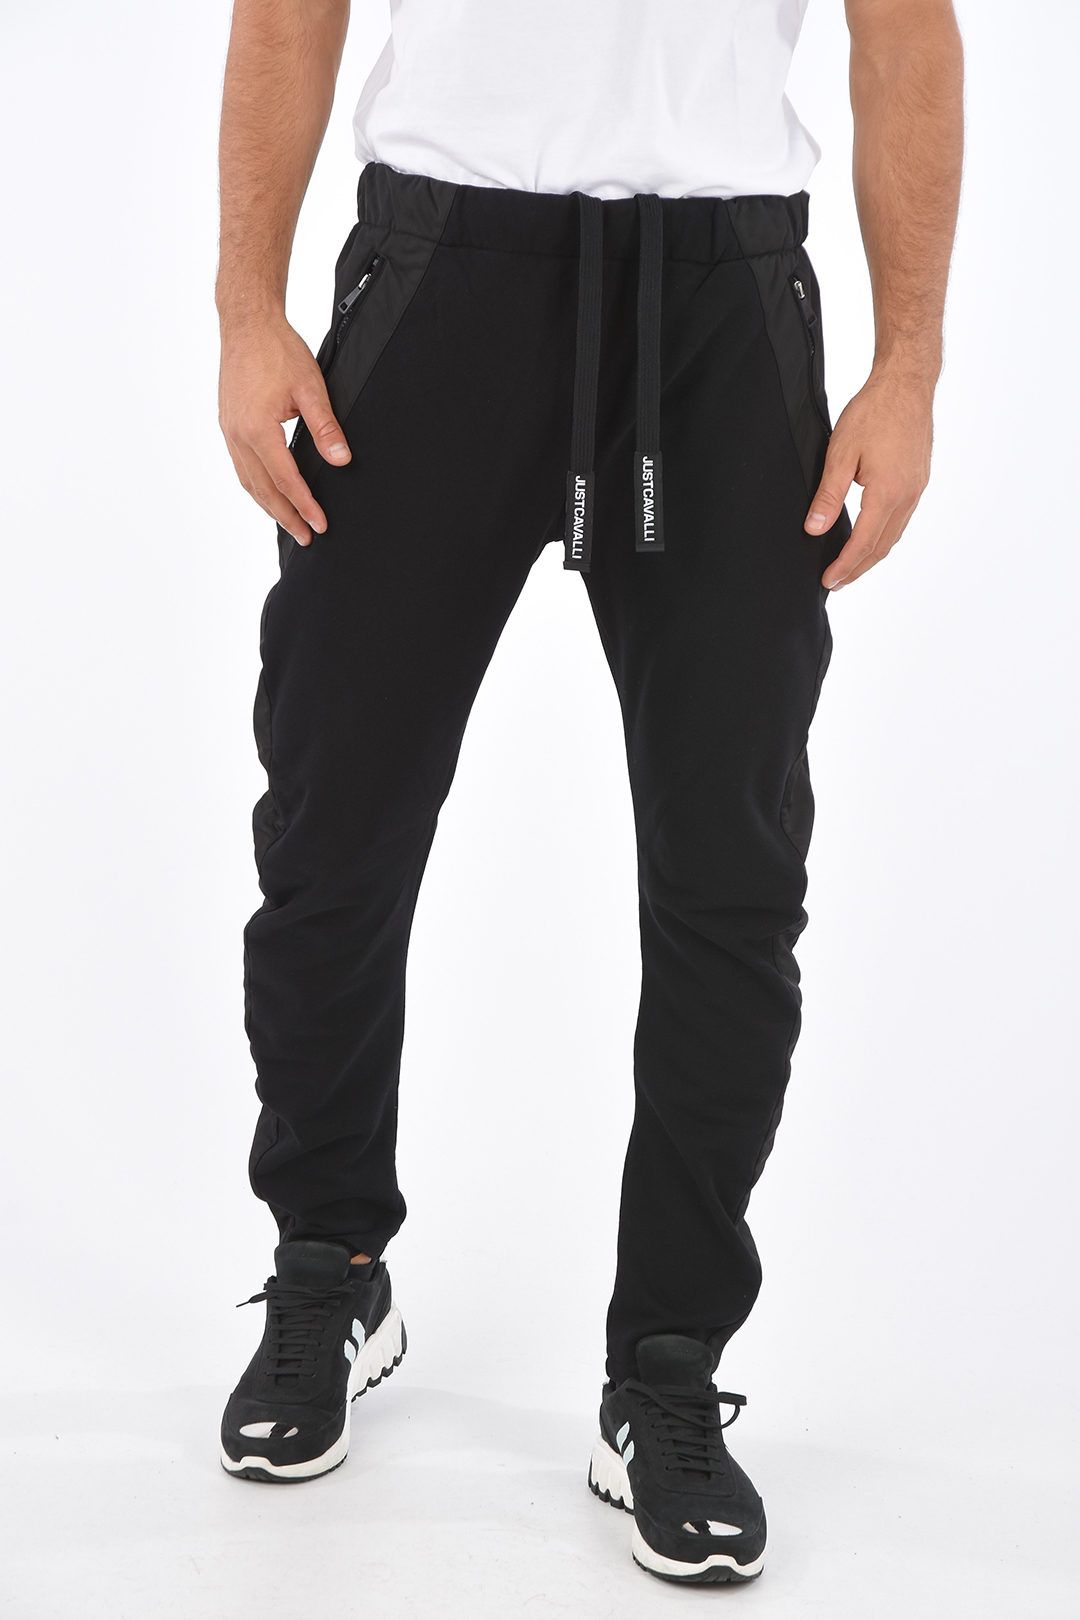 Nike Men's Track Pants Size 2XL Navy Blue Gray Side Stripe Polyester  Athletic | eBay